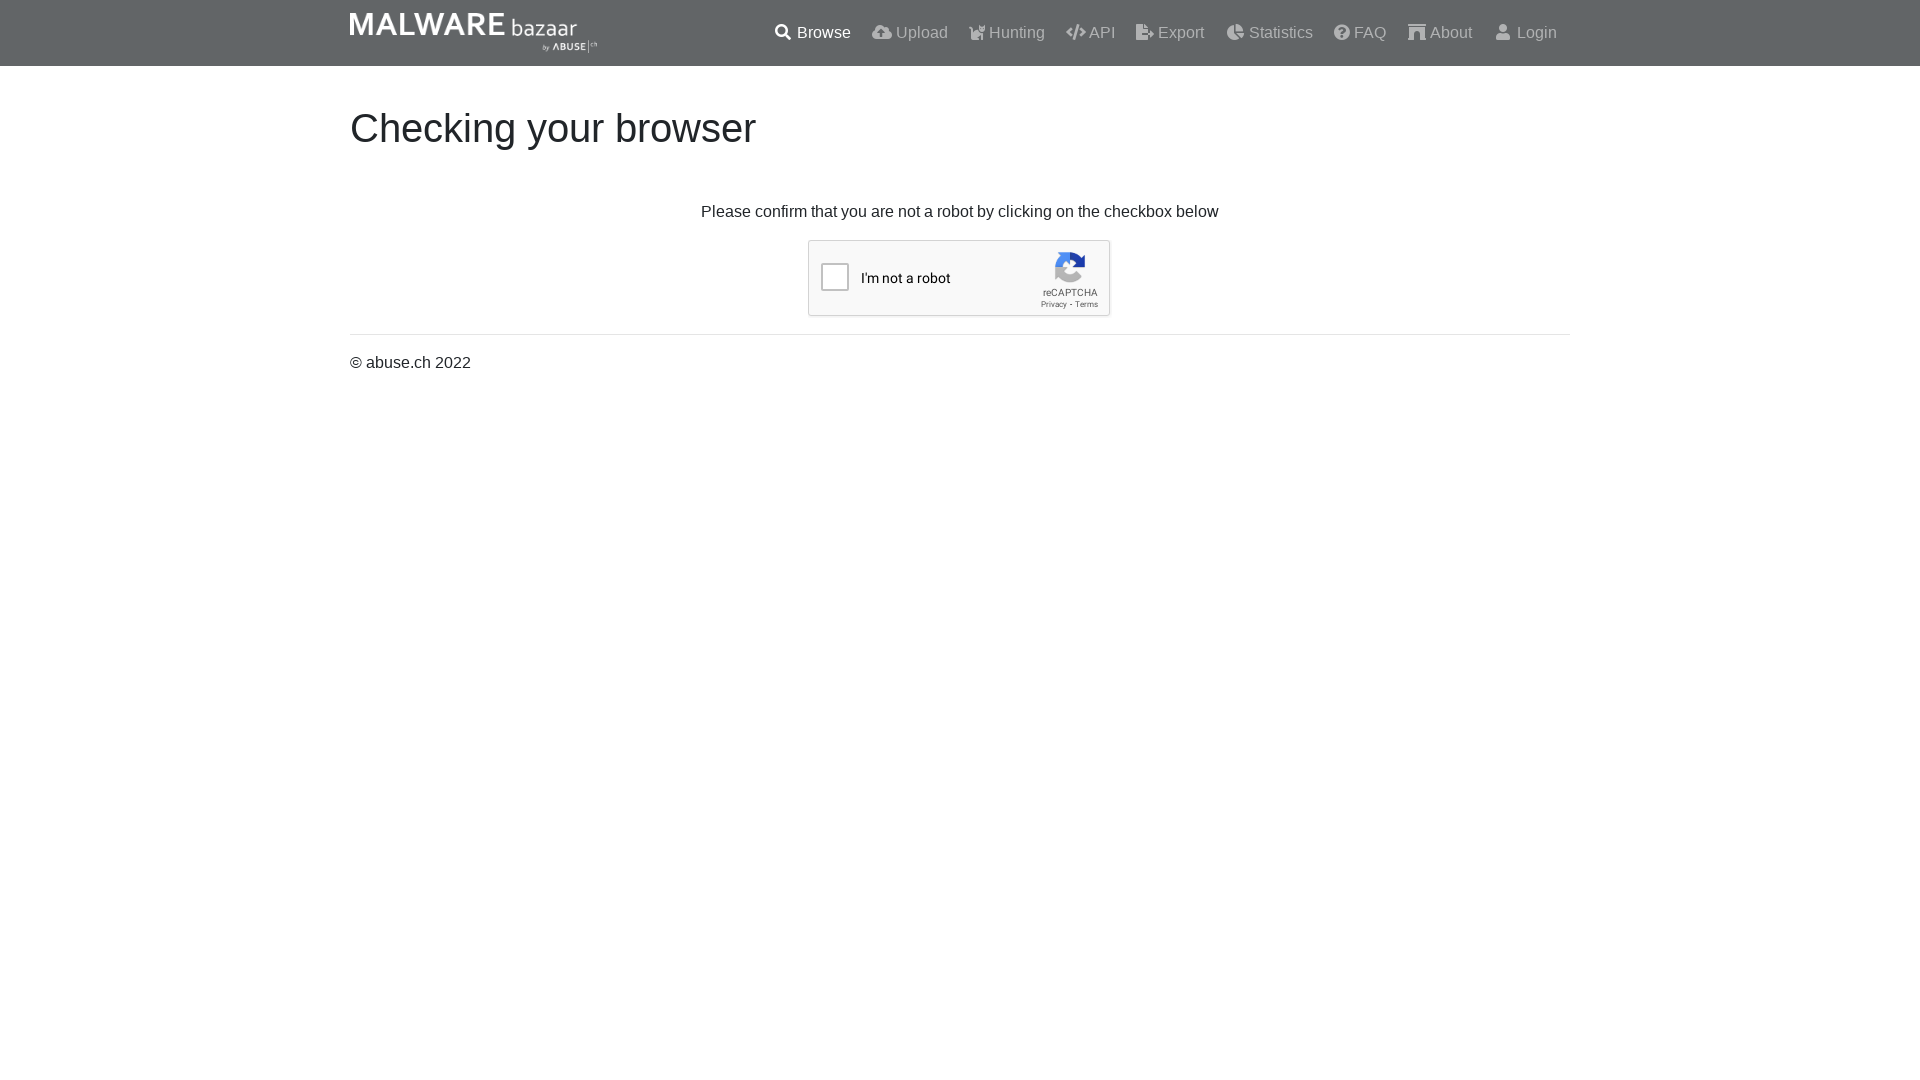 MalwareBazaar | Browse Checking your browser